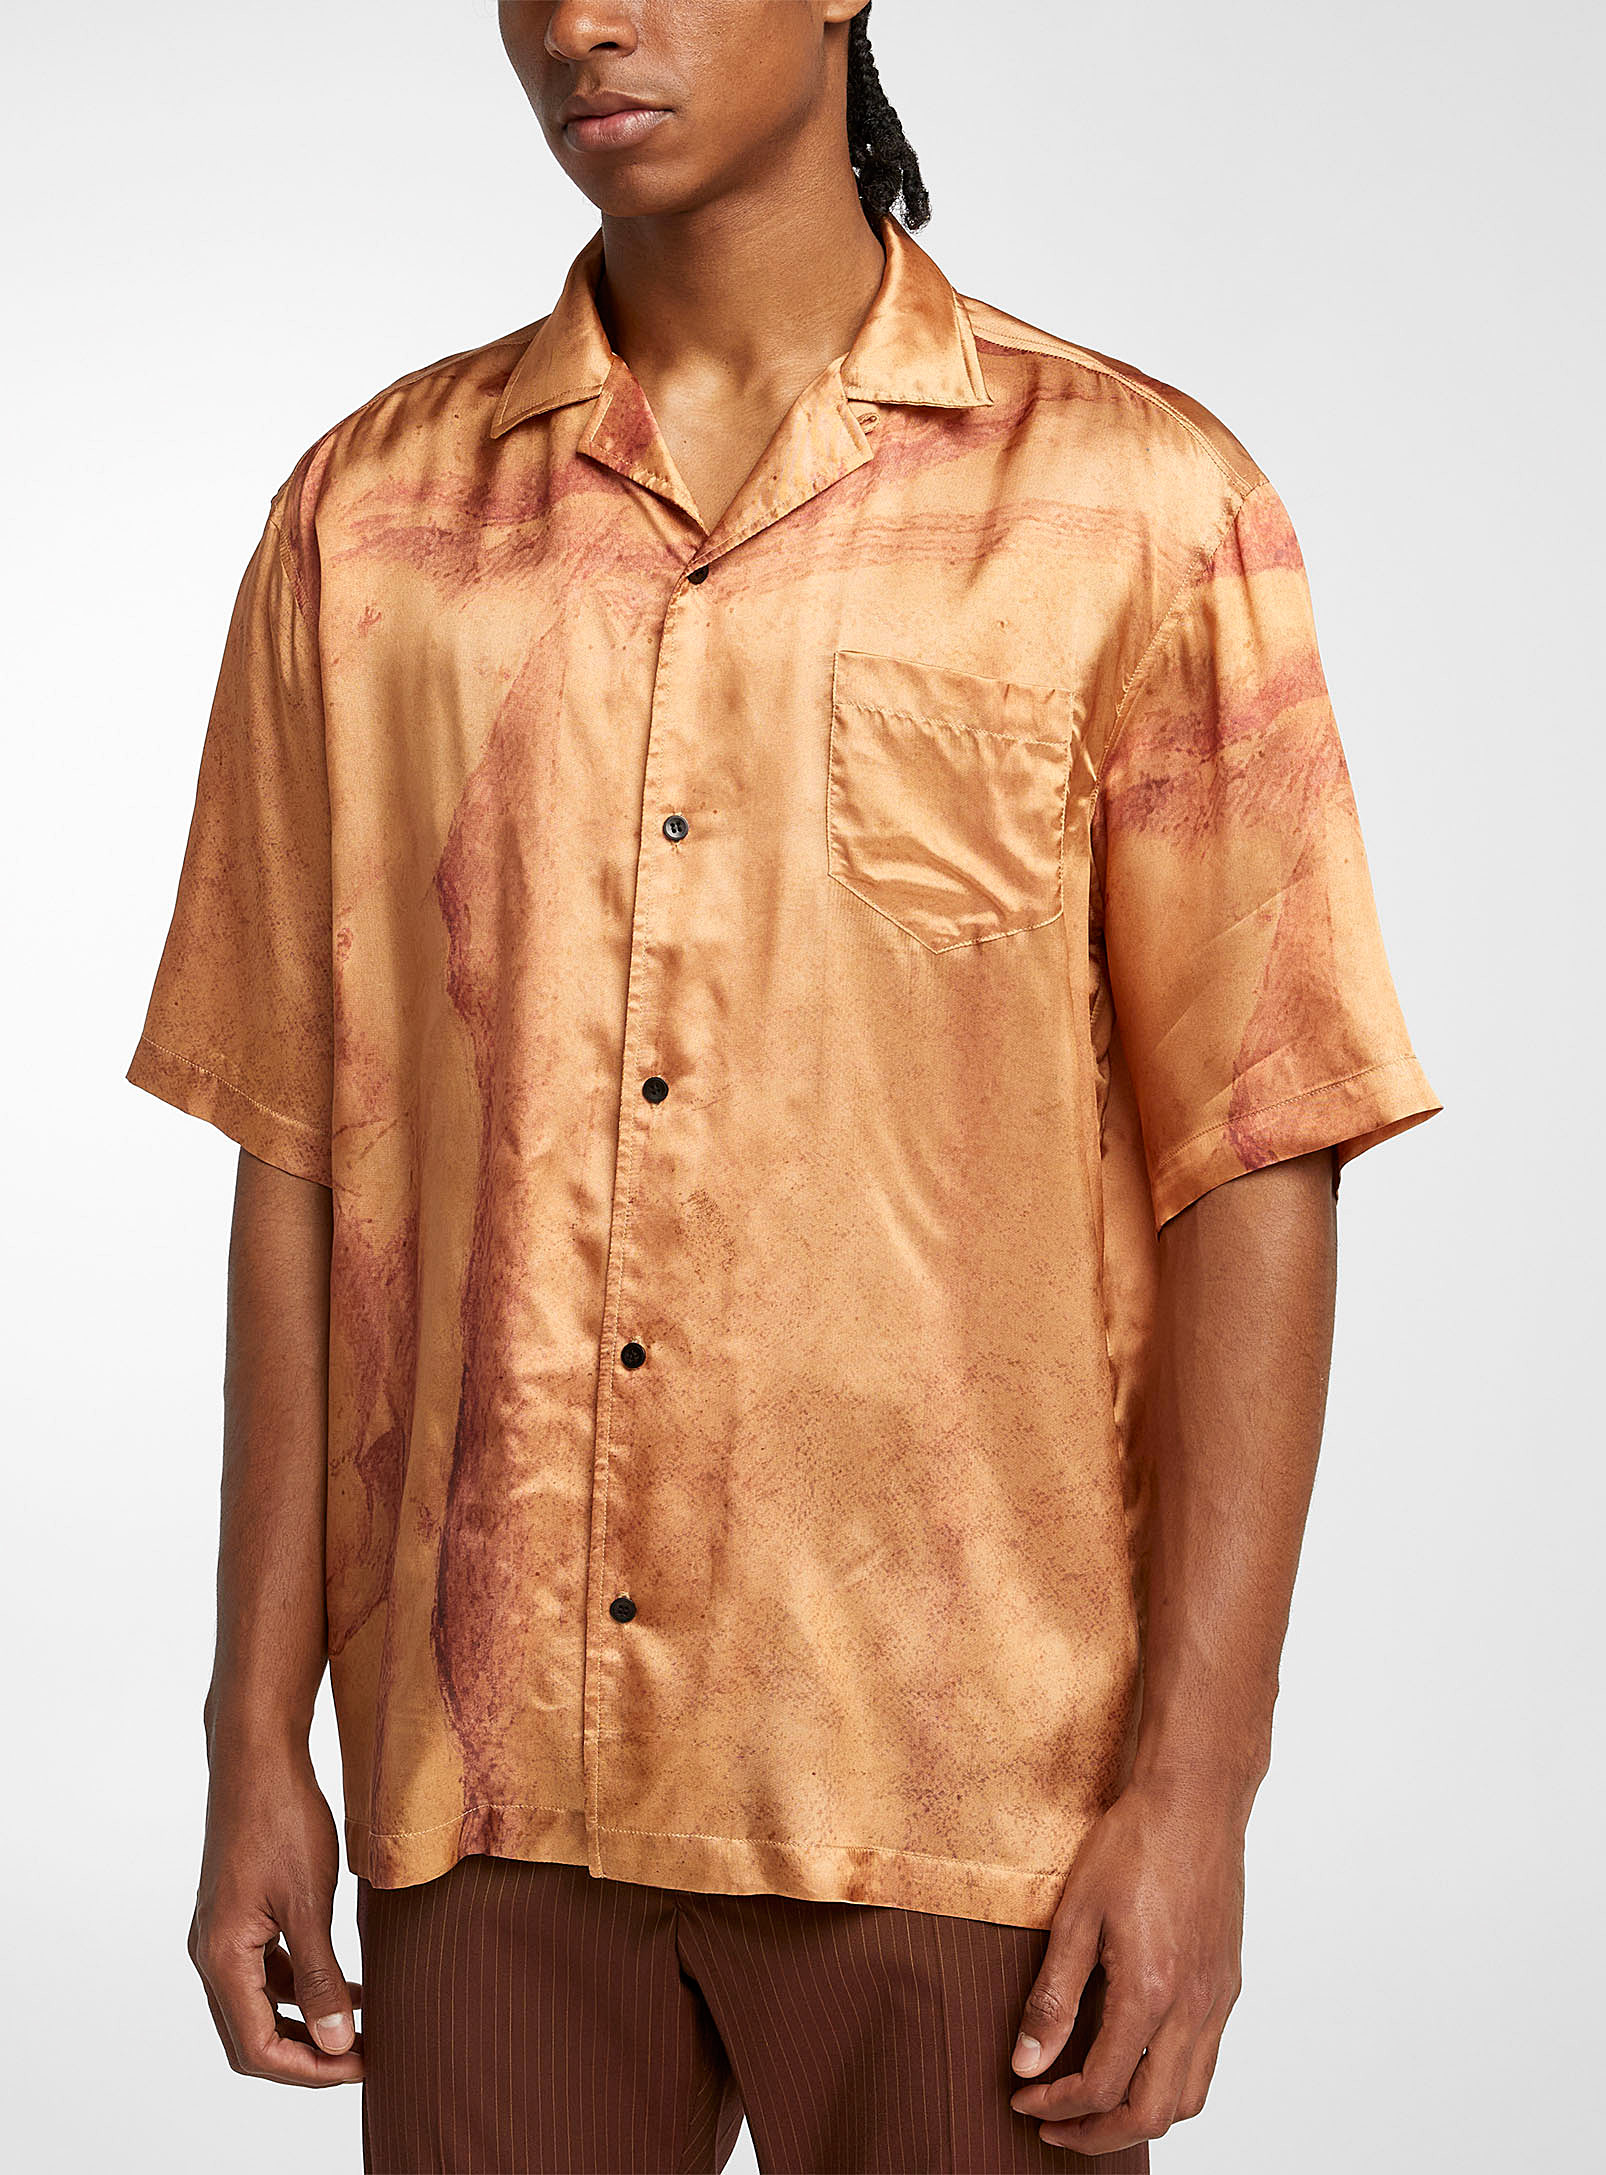 Egonlab - Men's Desert print bowling shirt